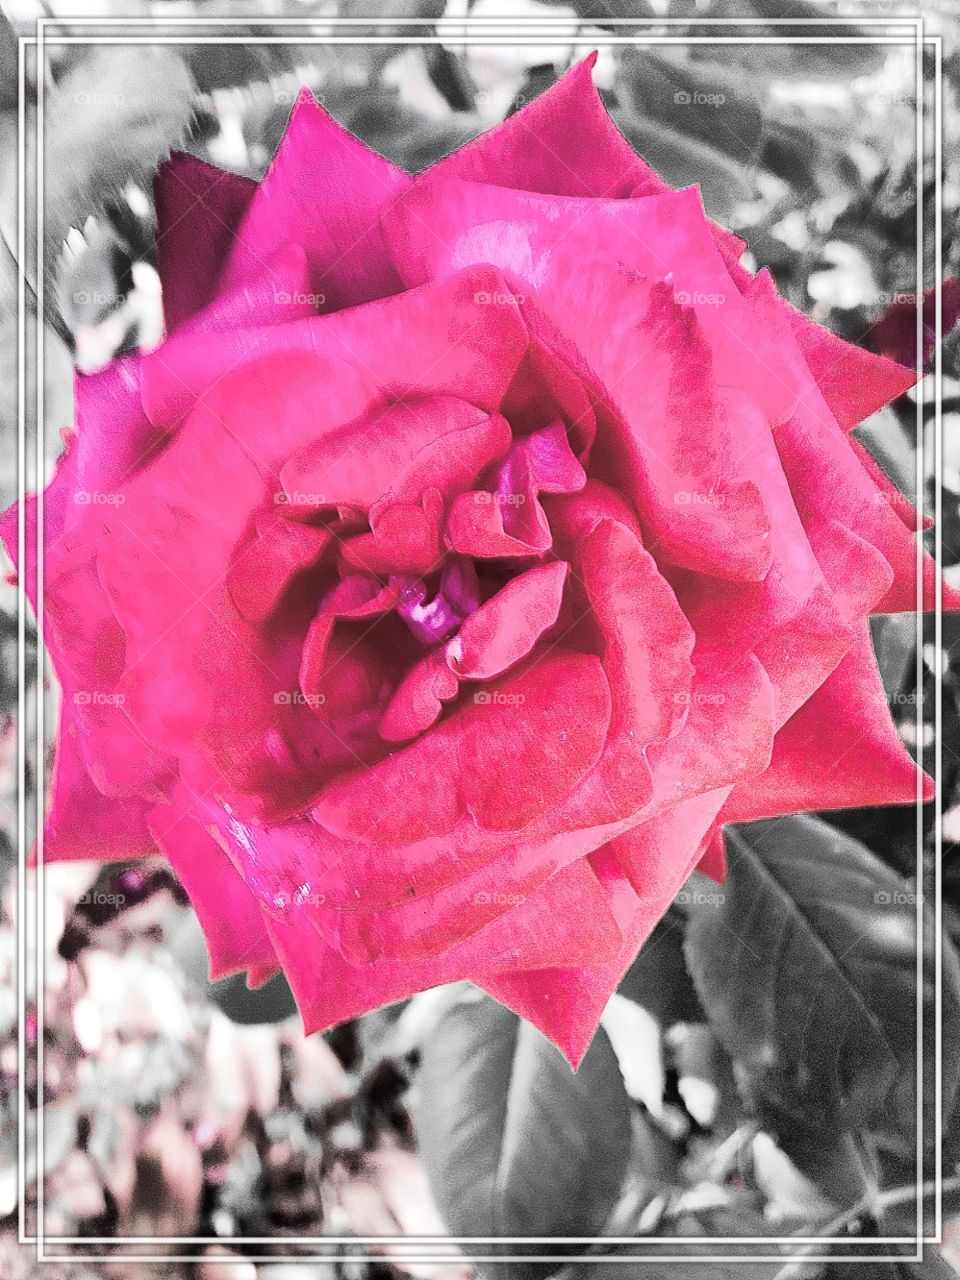 a rose4you